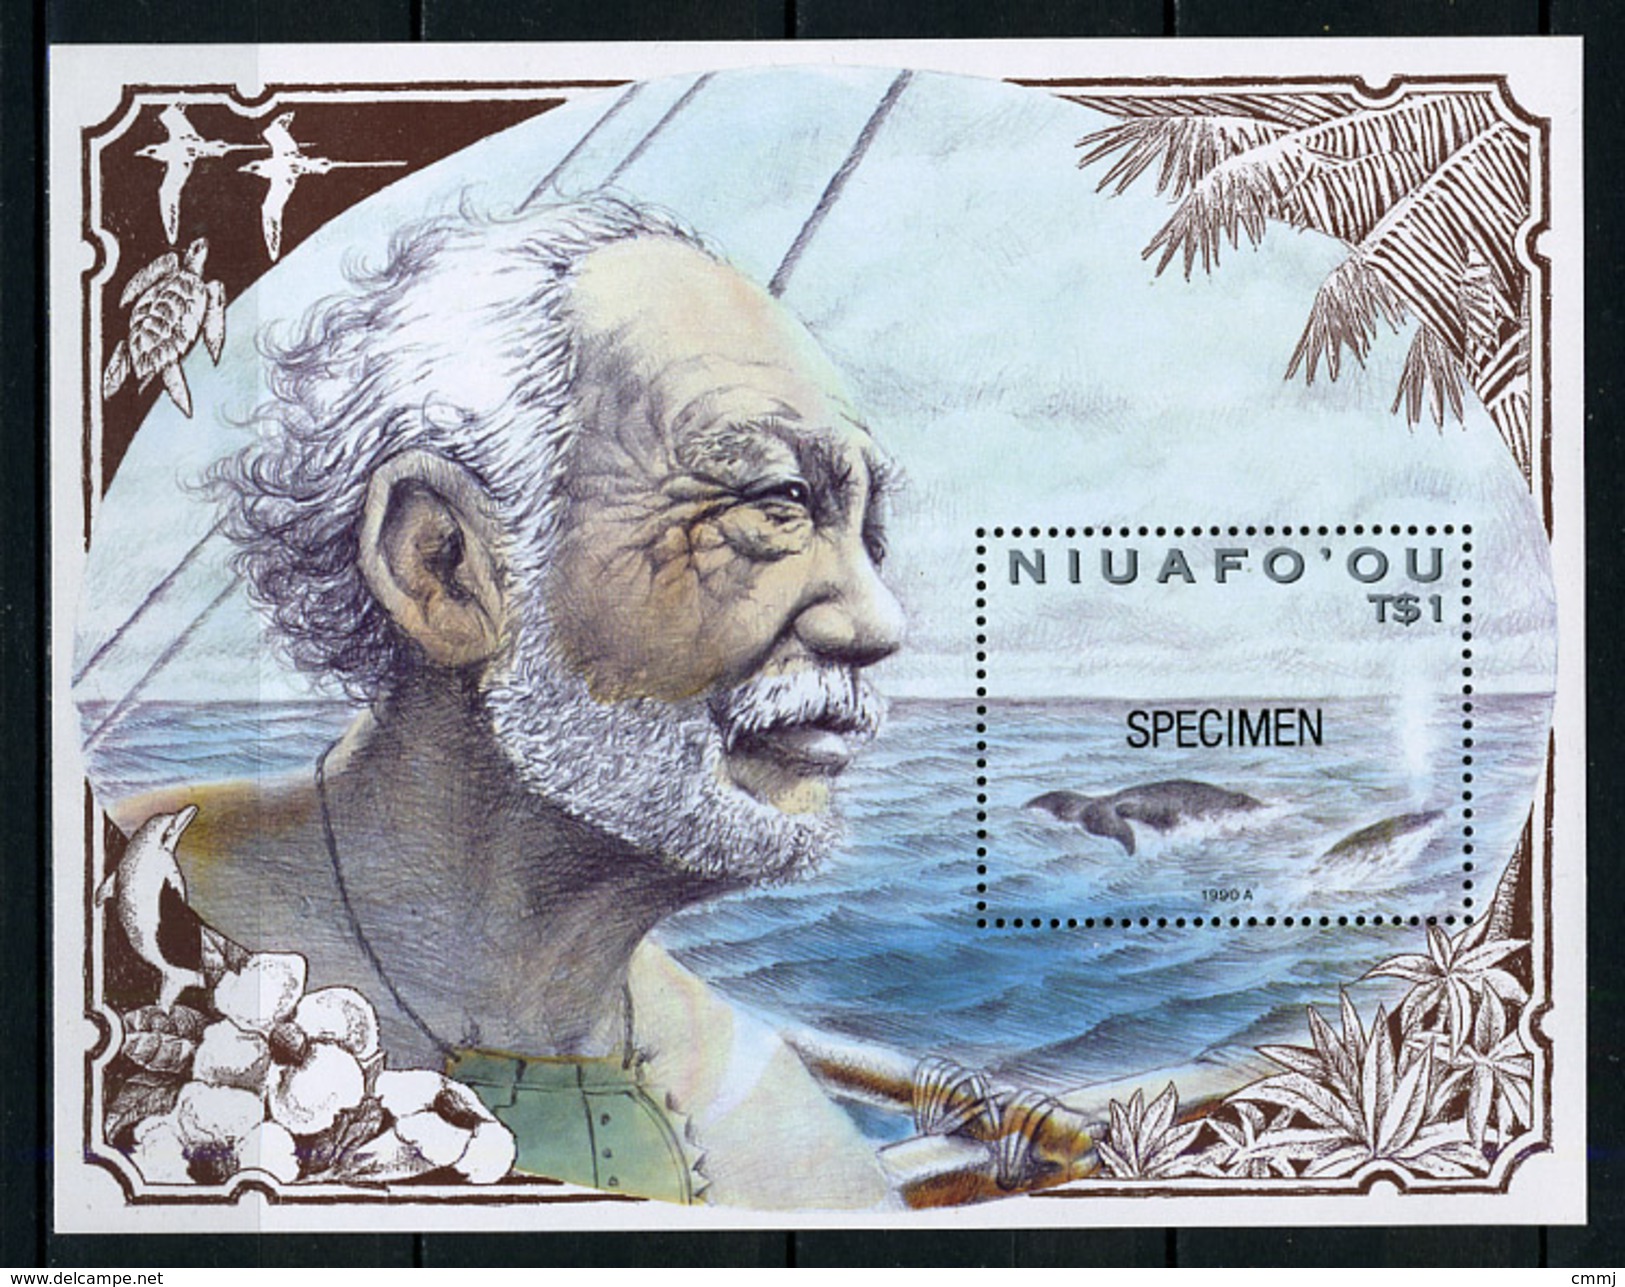 1990A - NIUAFO'OU - Mi. Nr. Block 10 SPECIMEN - NH - (G-EA - 38) - Tonga (1970-...)